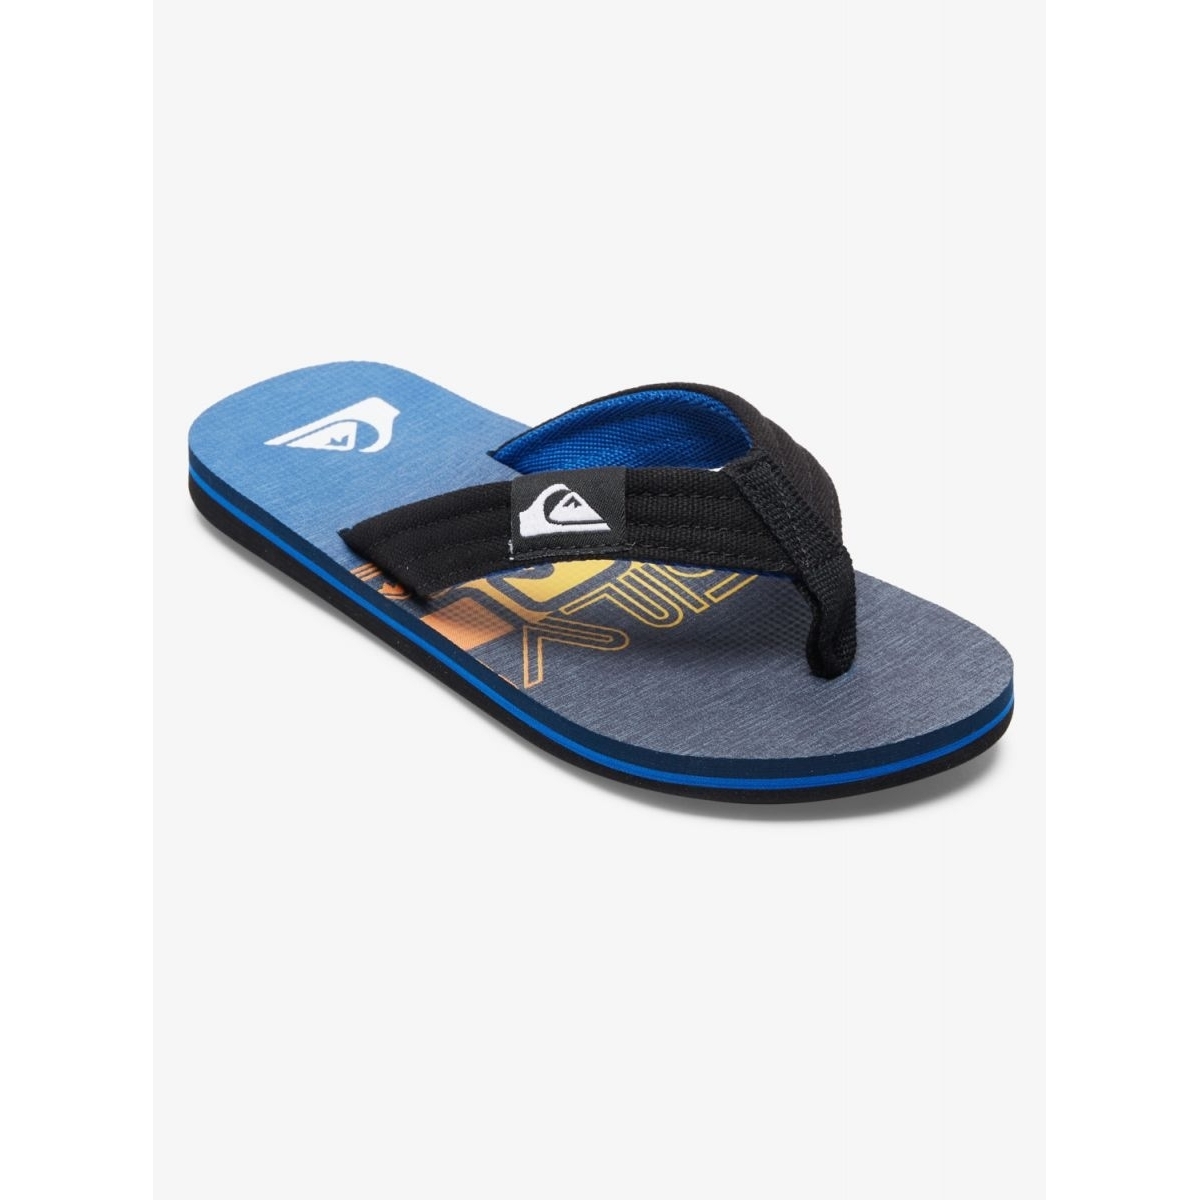 Quiksilver Boys' Molokai Layback Flip Flop Sandals Blue 6 - AQBL100591-BYJ6 BLUE 6 - BLUE 6, 1 Little Kid